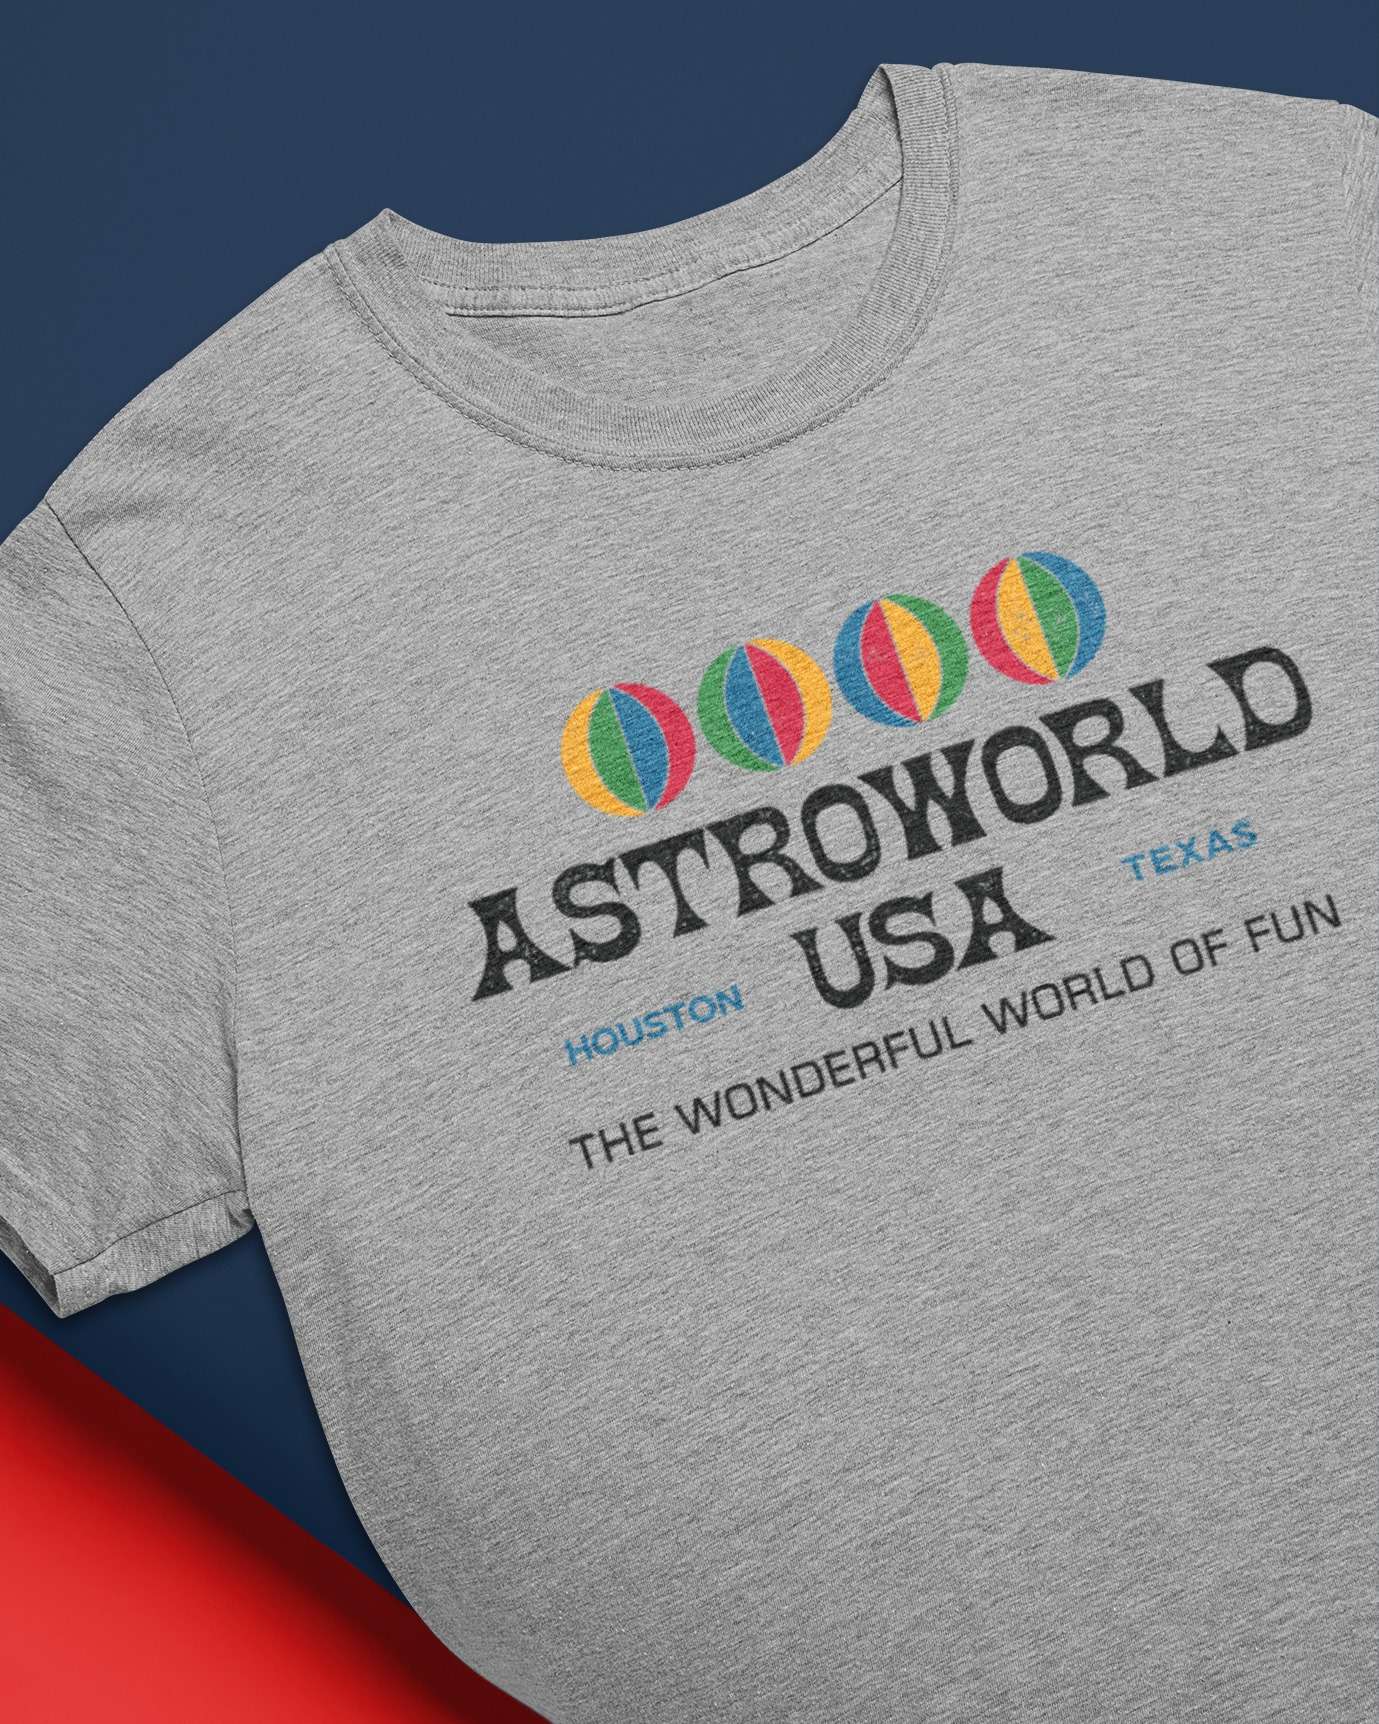 Astroworld USA - The wonderful world of fun, Houston Texas